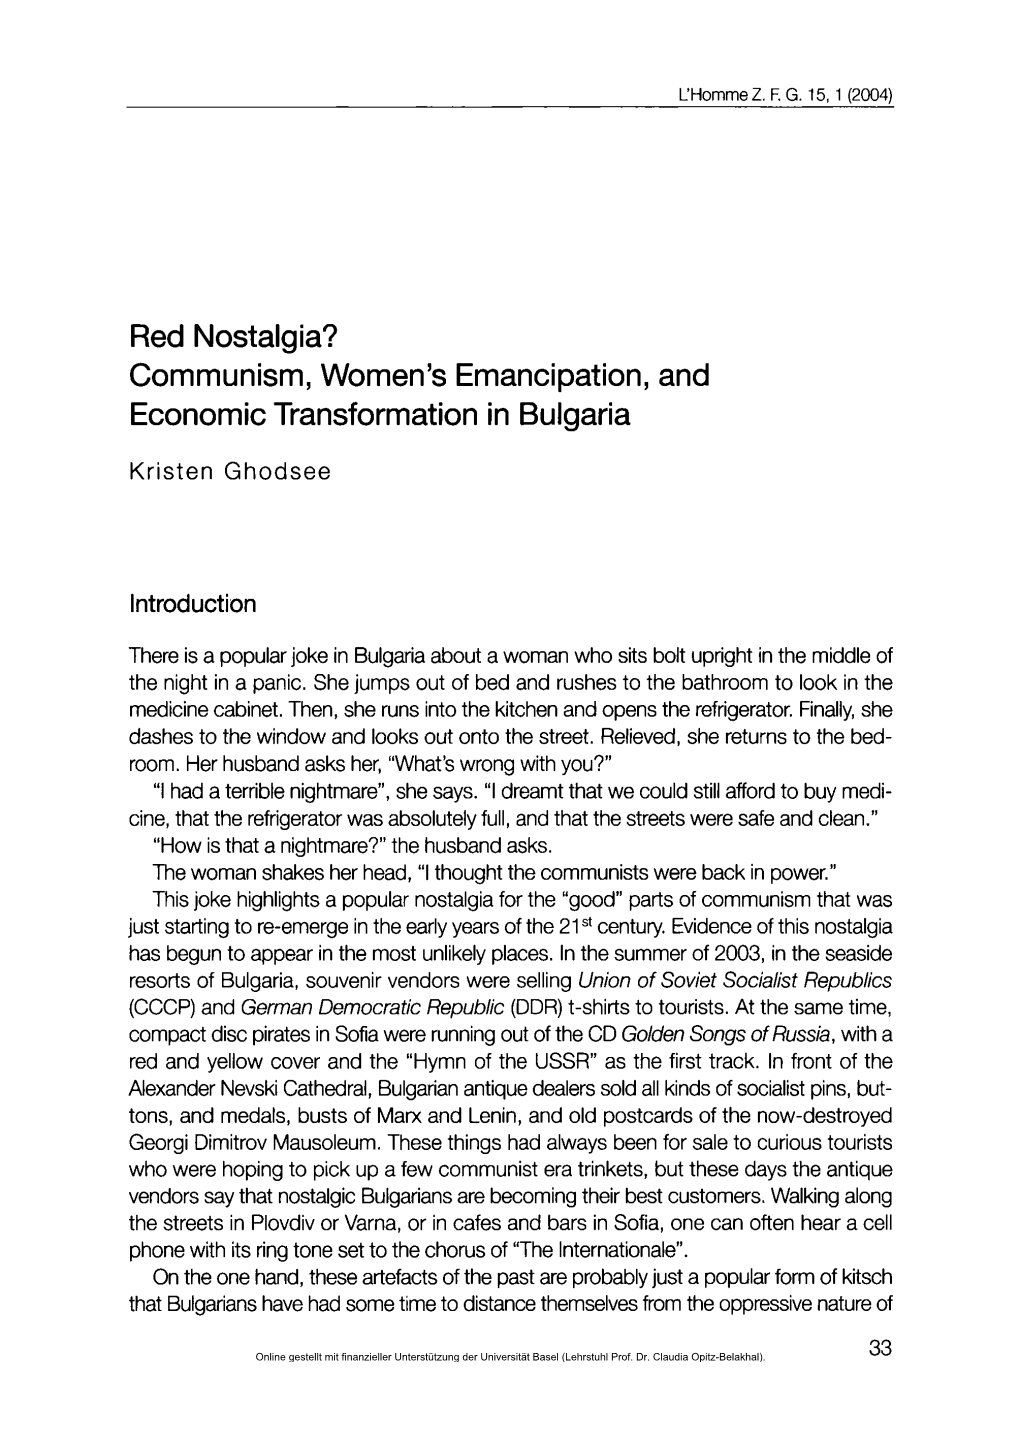 Communism, Women's Emancipation, and Economic Transformation in Bulgaria